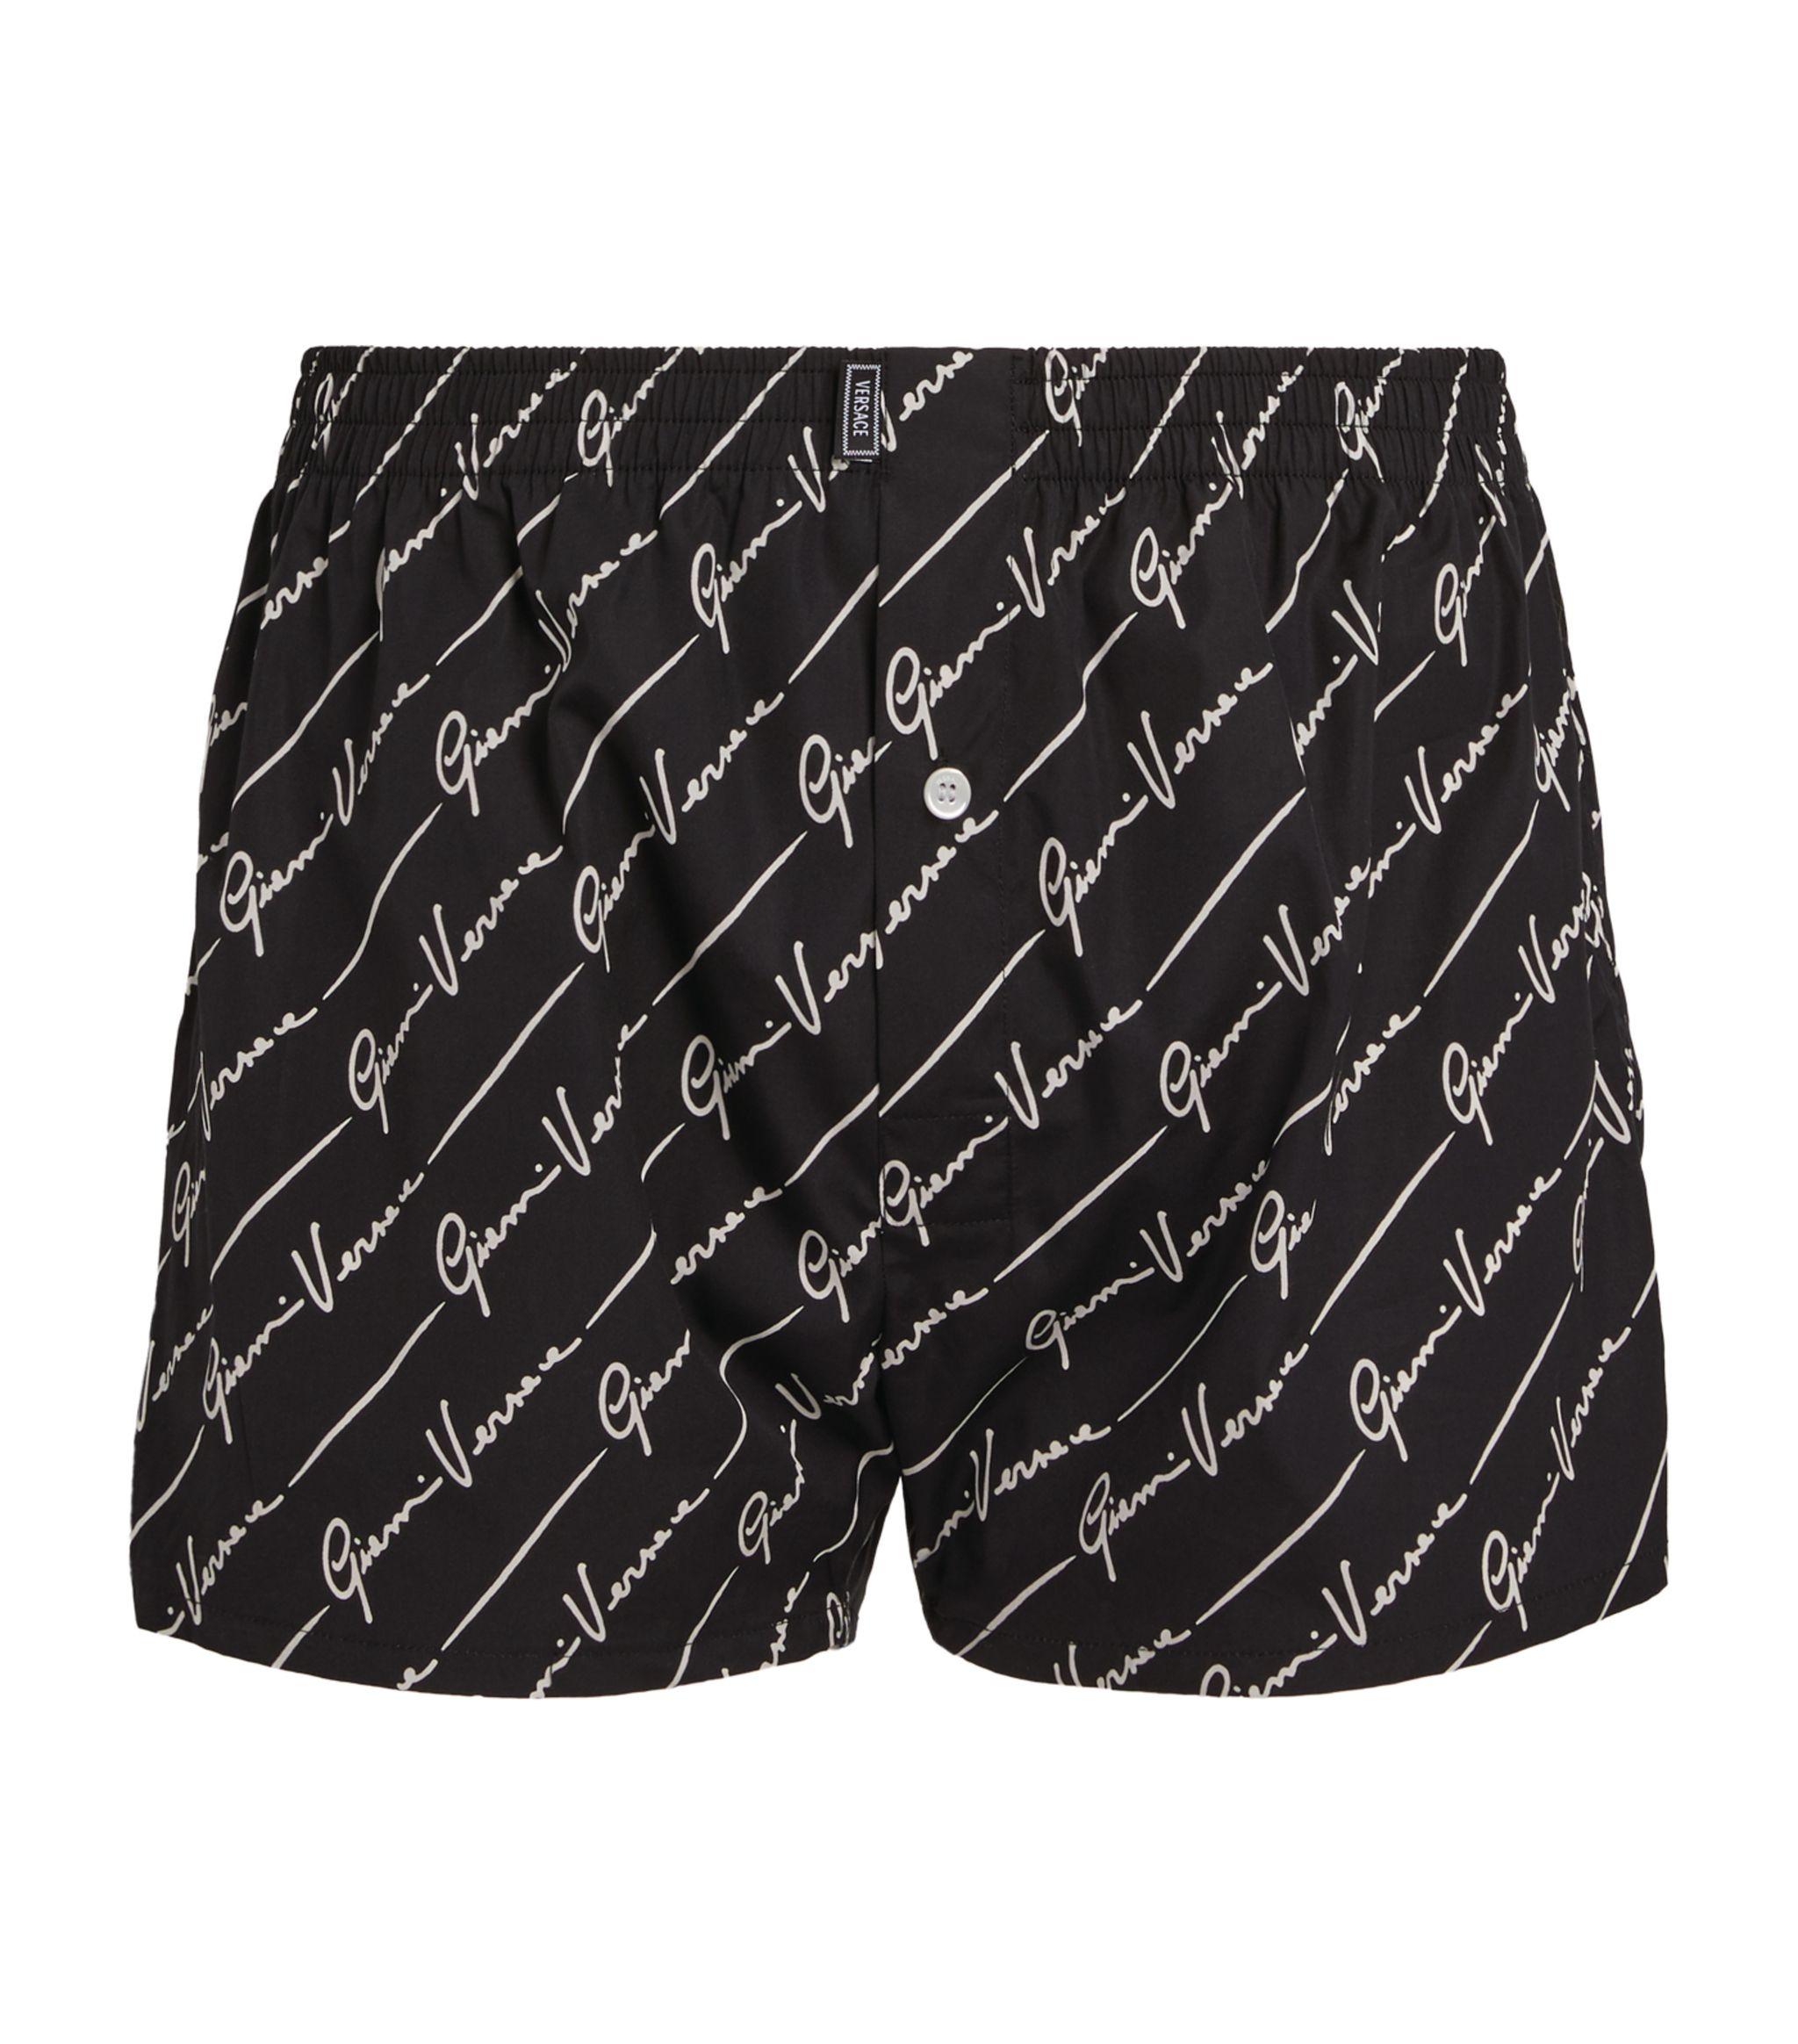 Versace Cotton Signature Print Boxer Shorts in Black for Men - Lyst